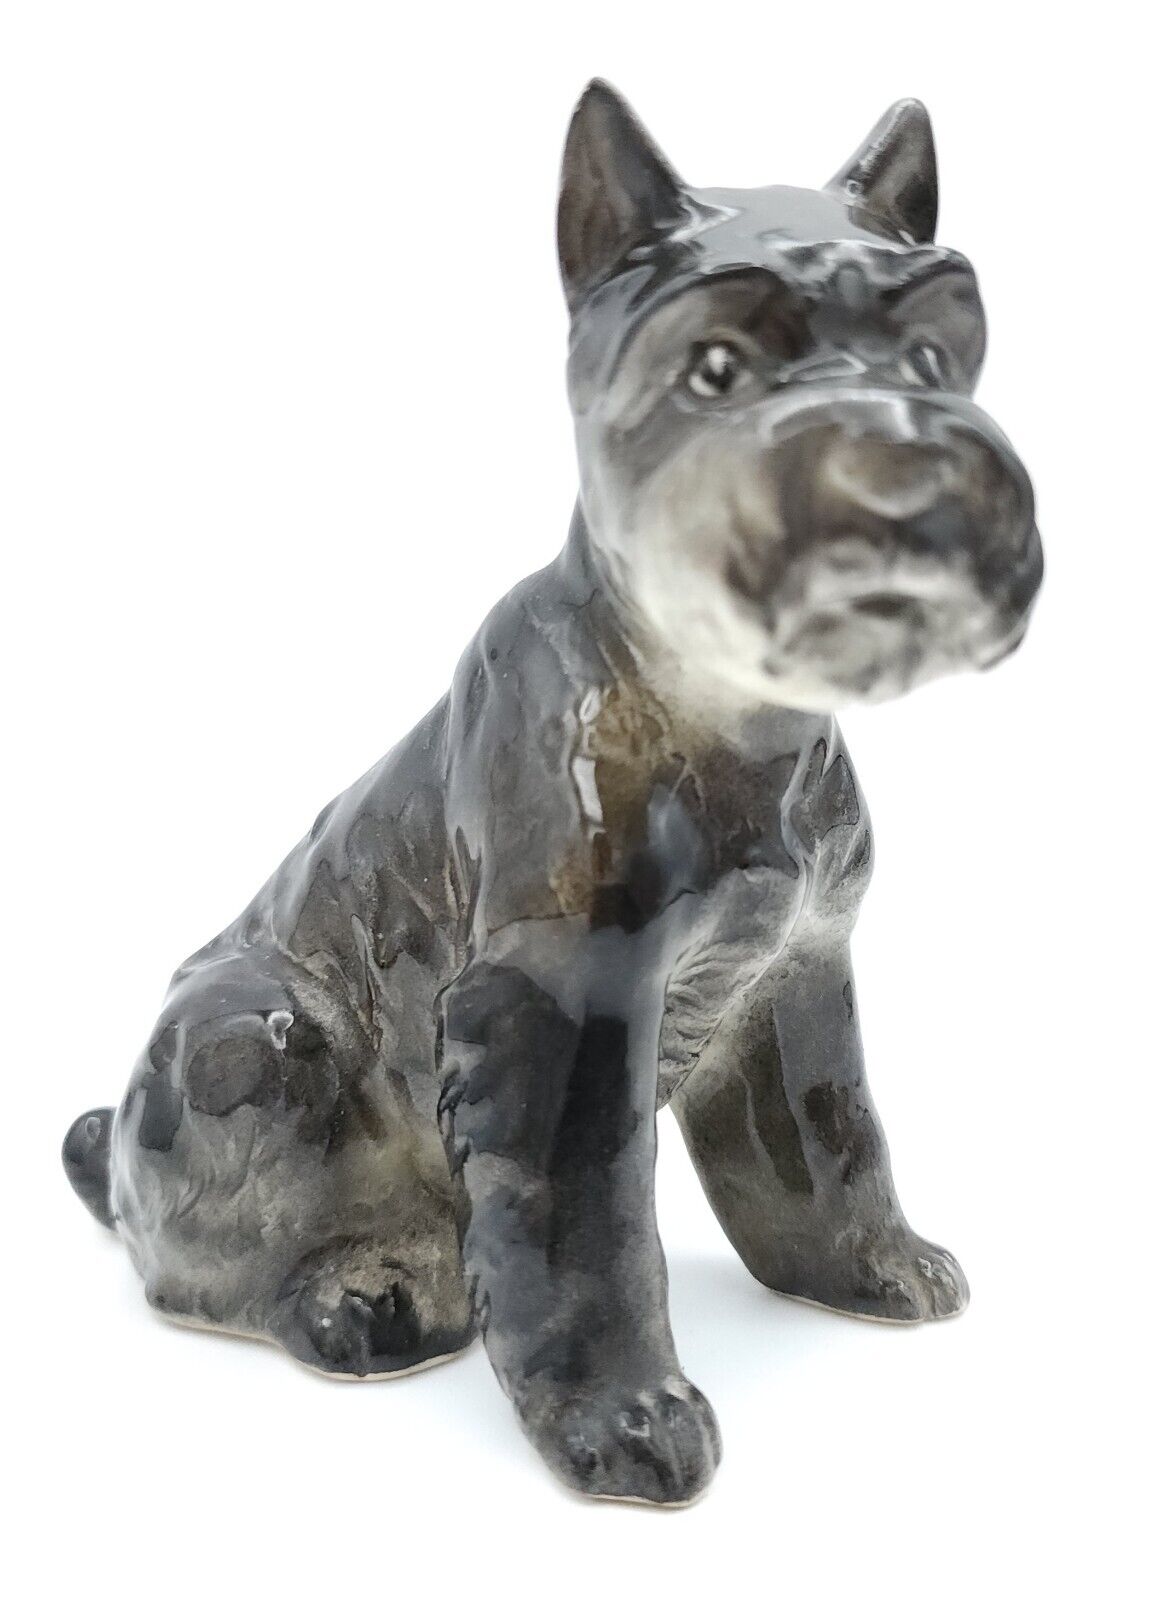 Vintage Sitting SHAFFORD GERMAN Schnauzer Dog Japan Figurine Porcelain 4.5”H  